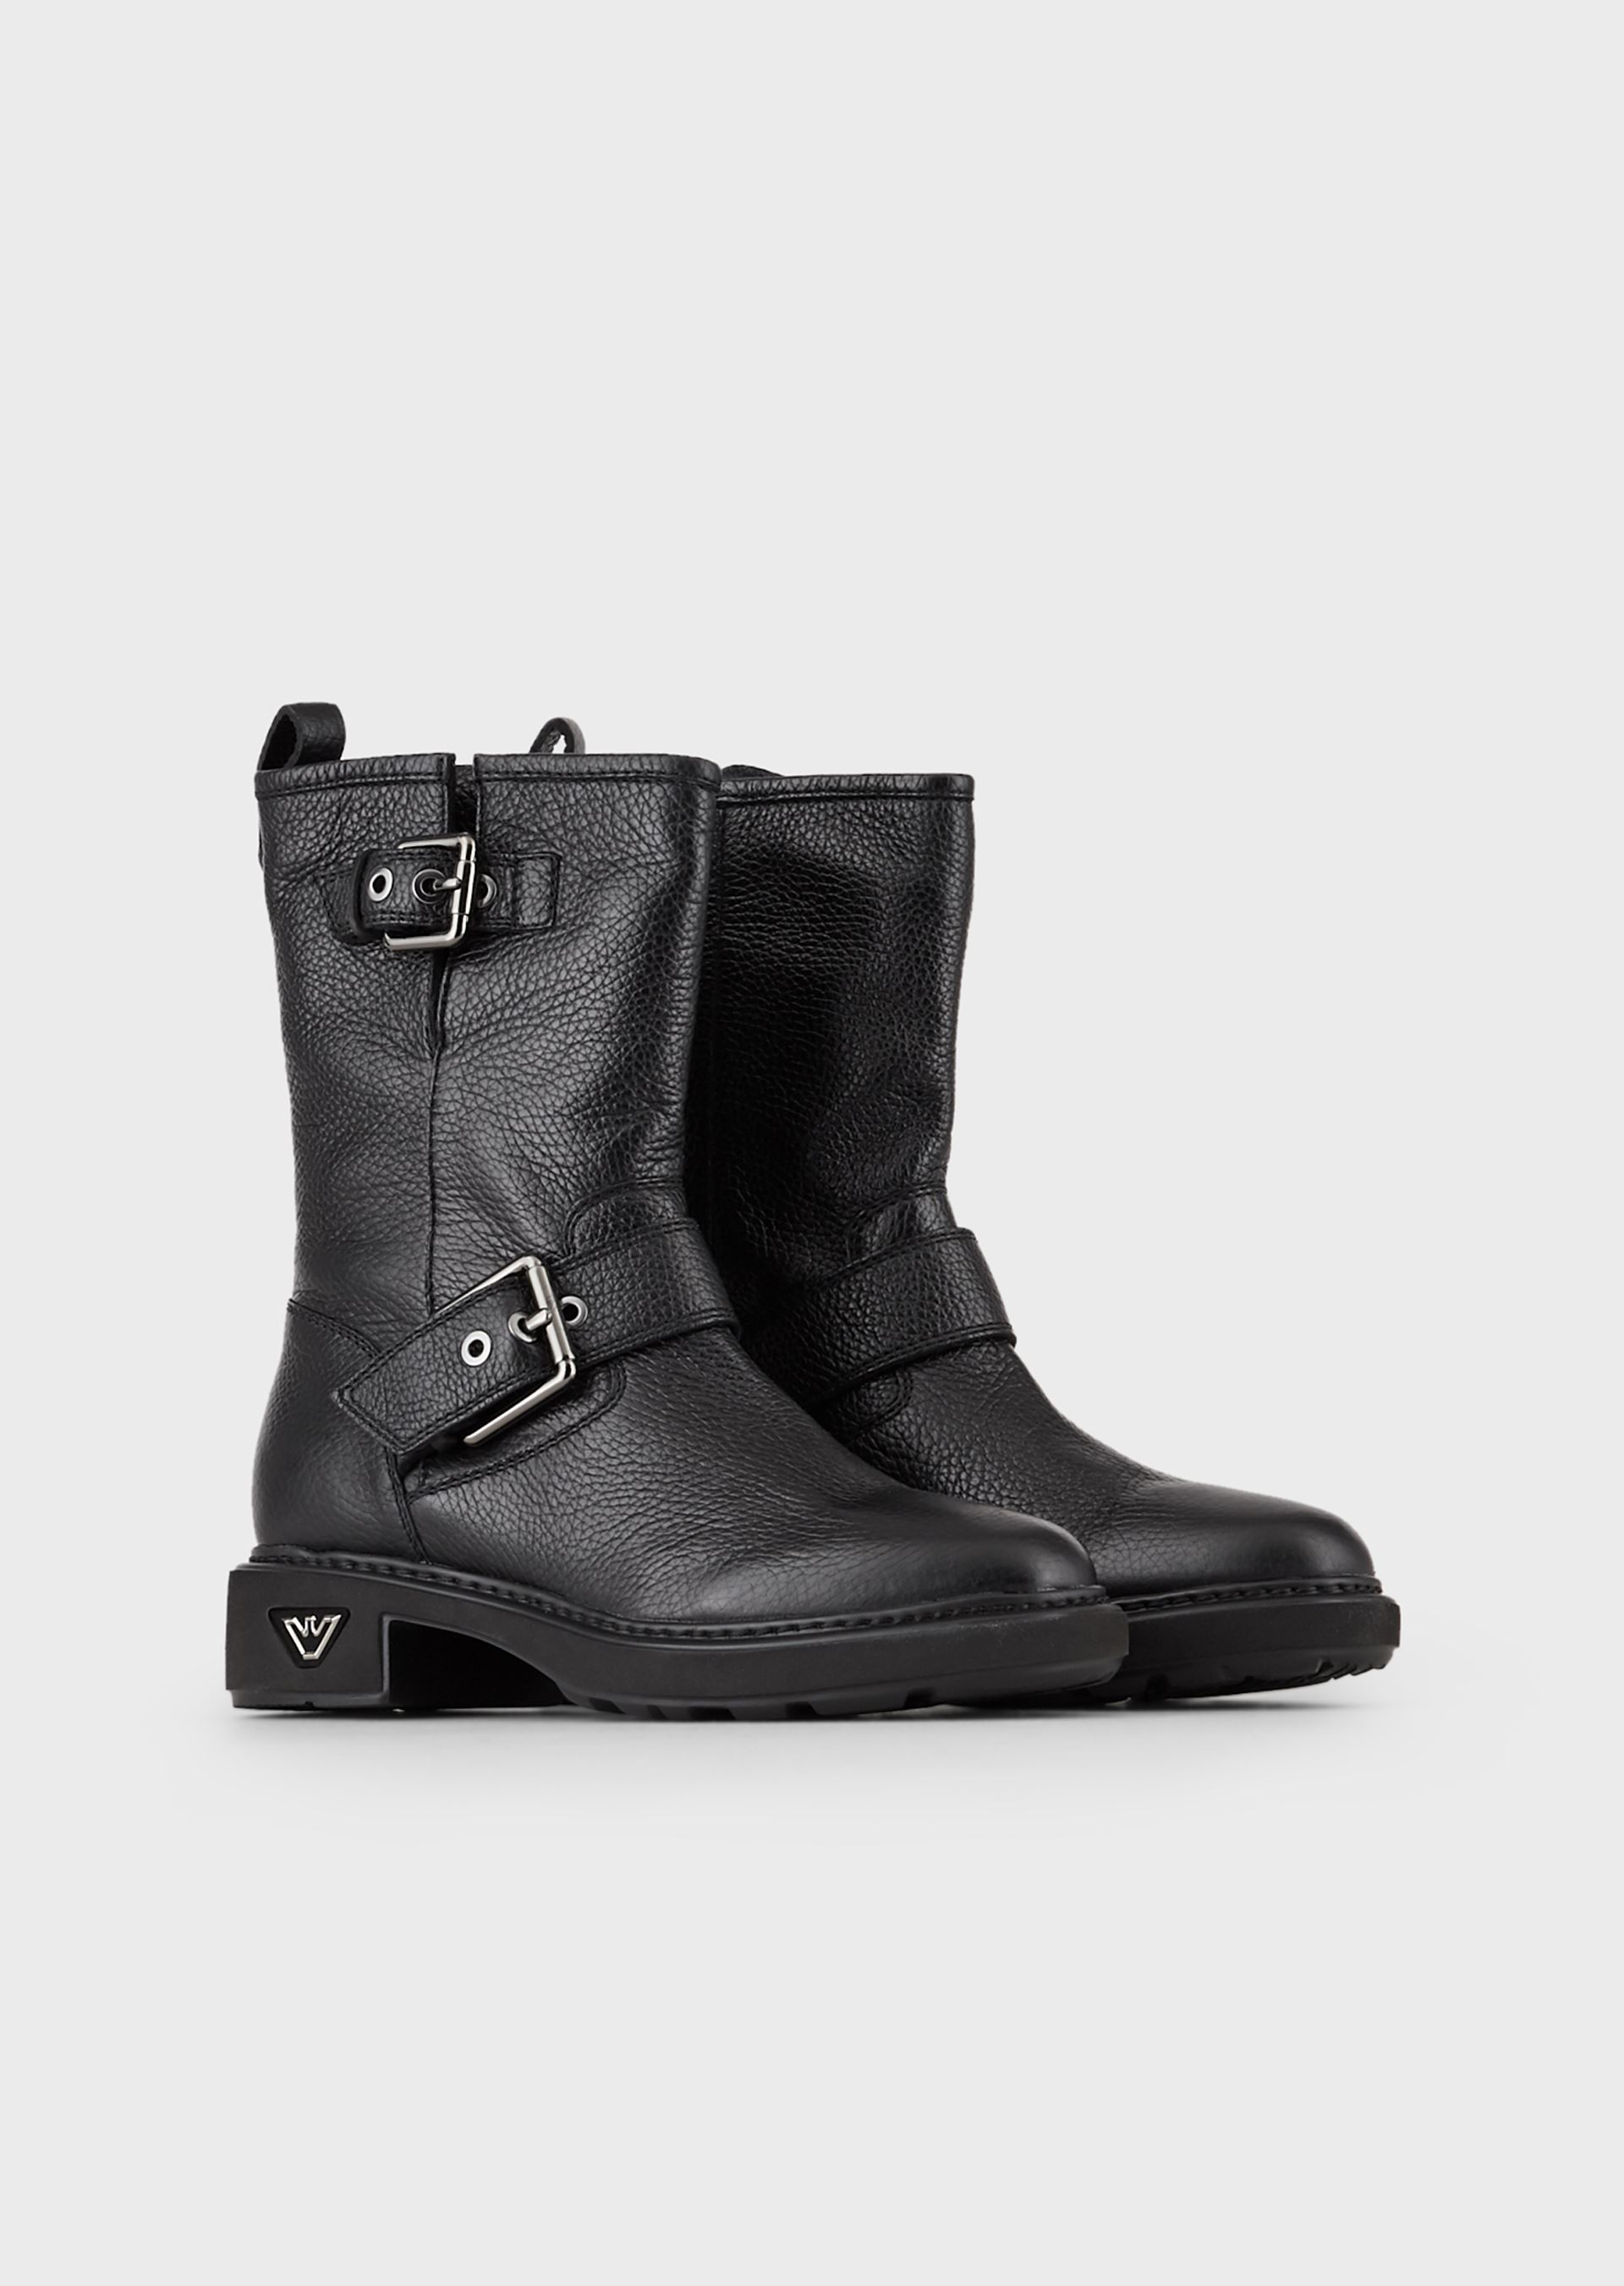 Emporio Armani Boots - Item 11754688 In Black